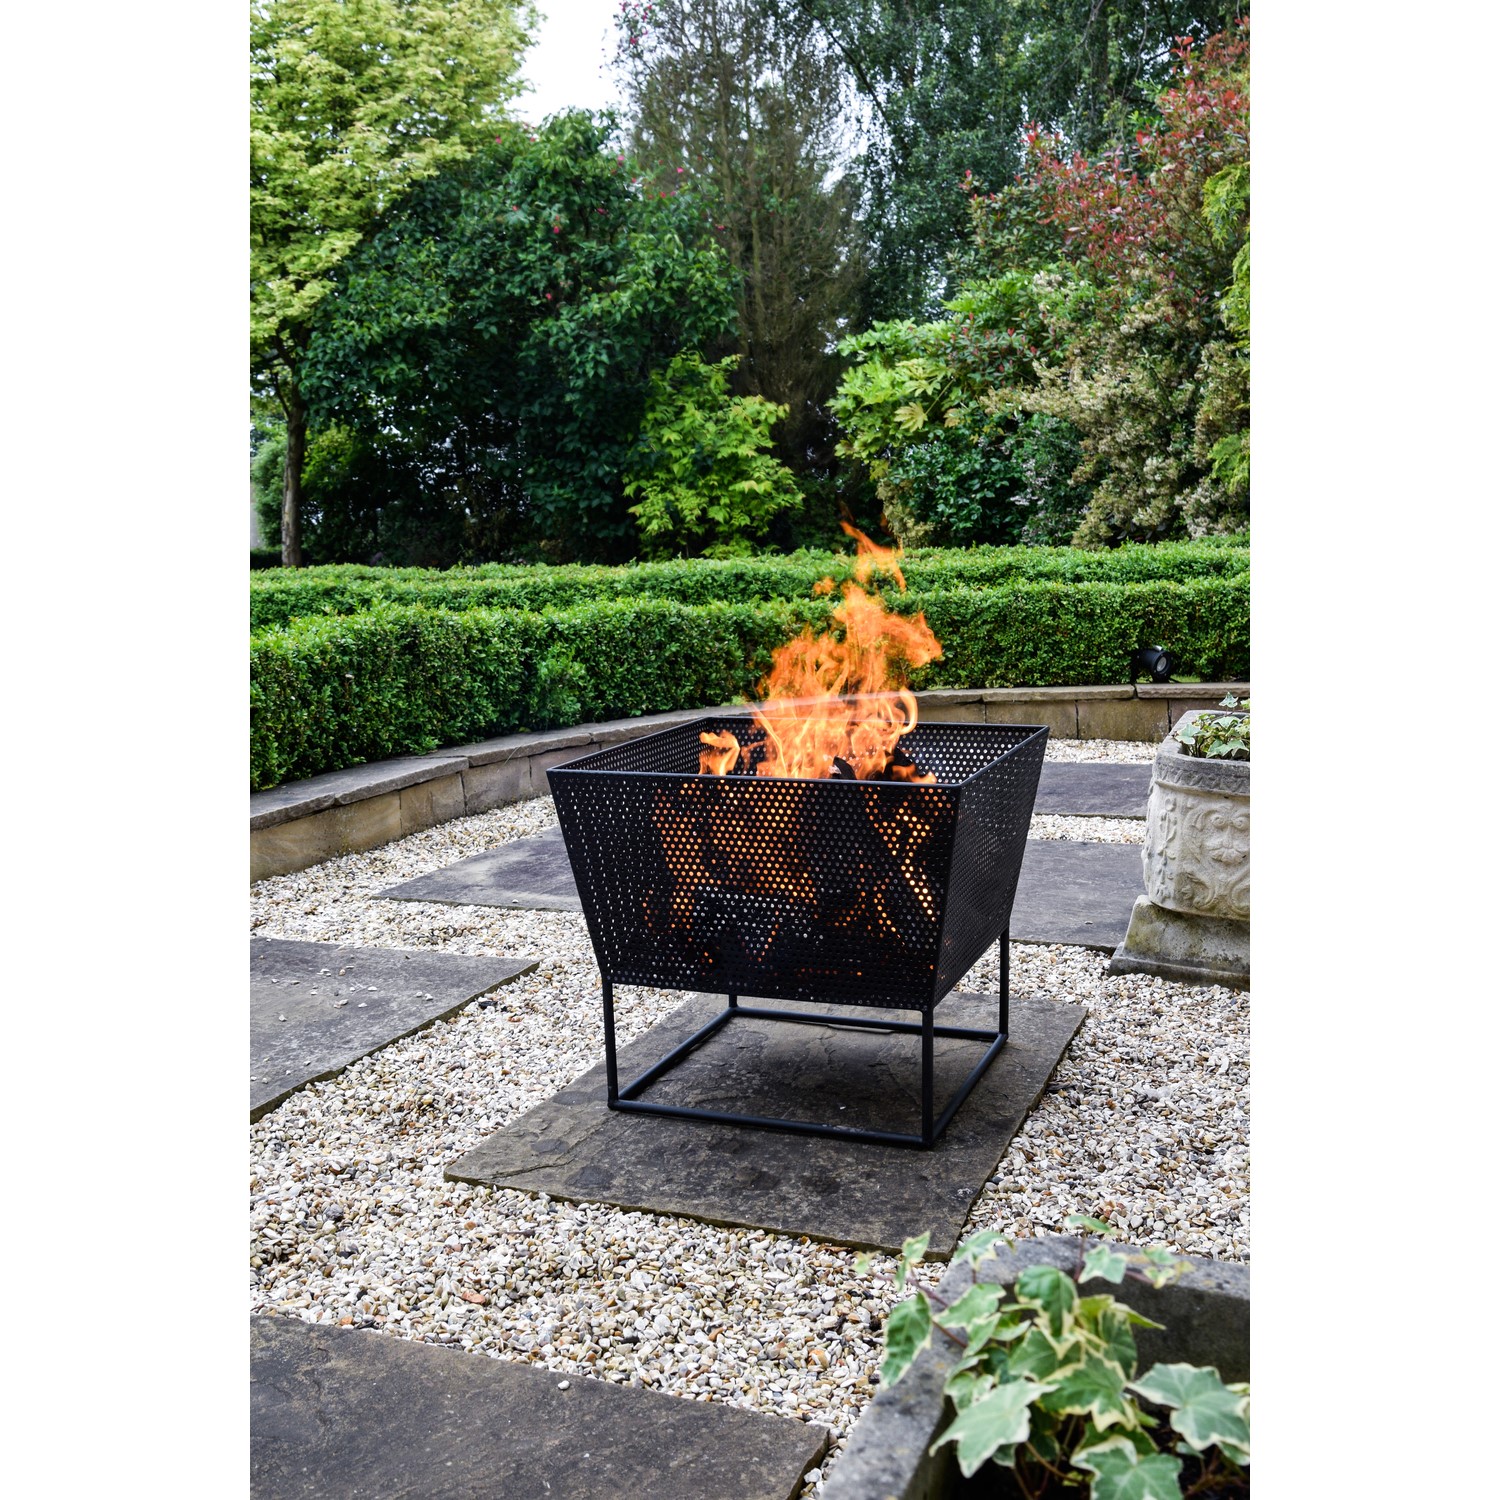 Read more about Ivyline outdoor norfolk firebowl black iron